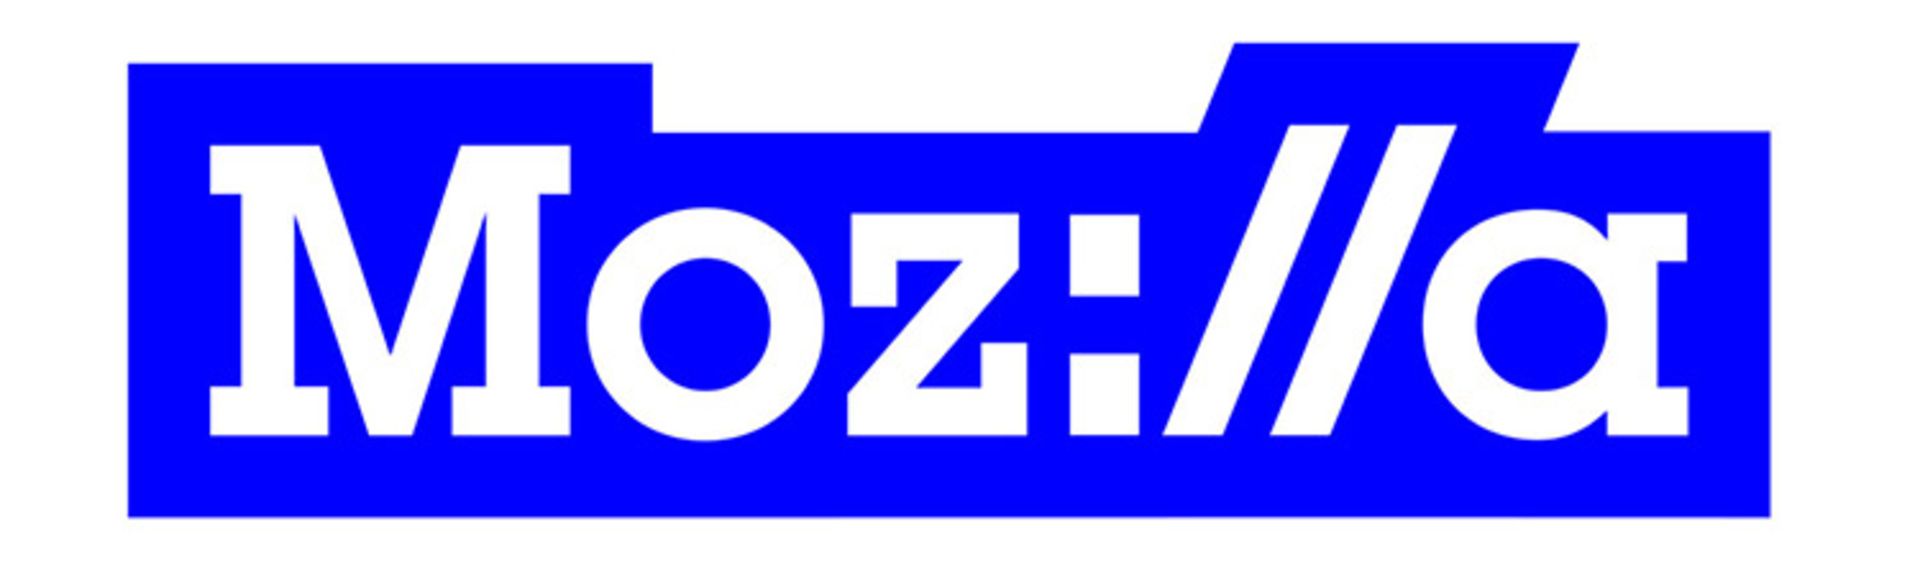 mozilla-logo-second-version